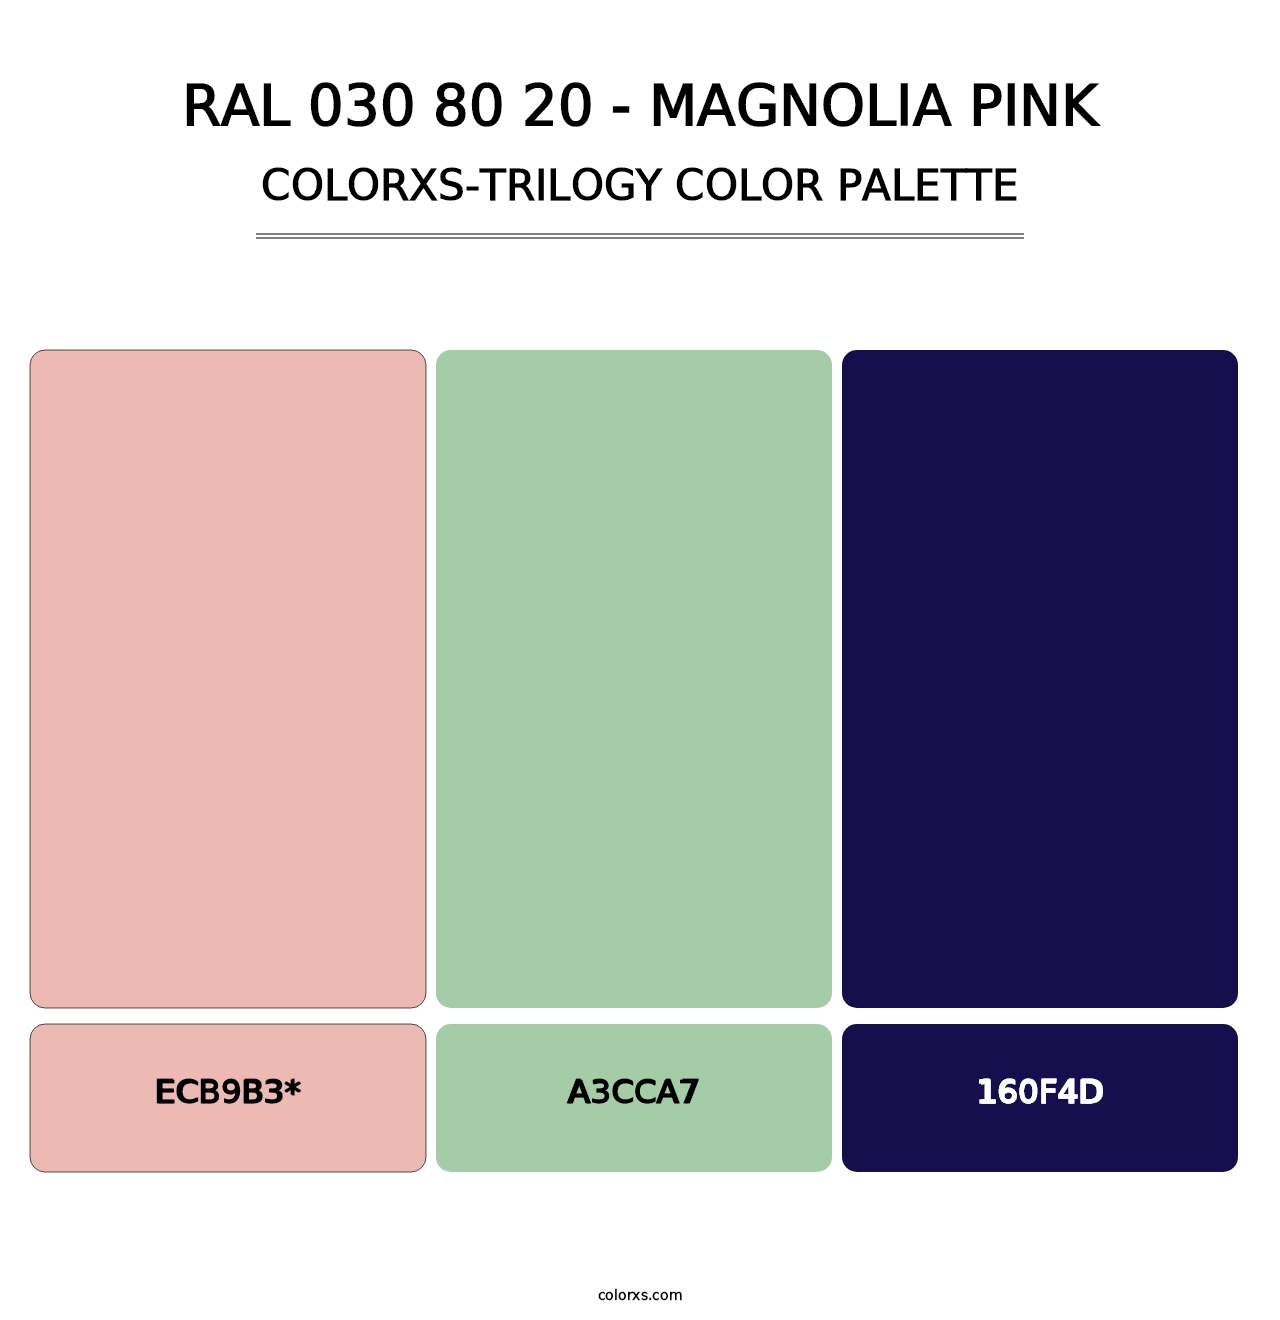 RAL 030 80 20 - Magnolia Pink - Colorxs Trilogy Palette